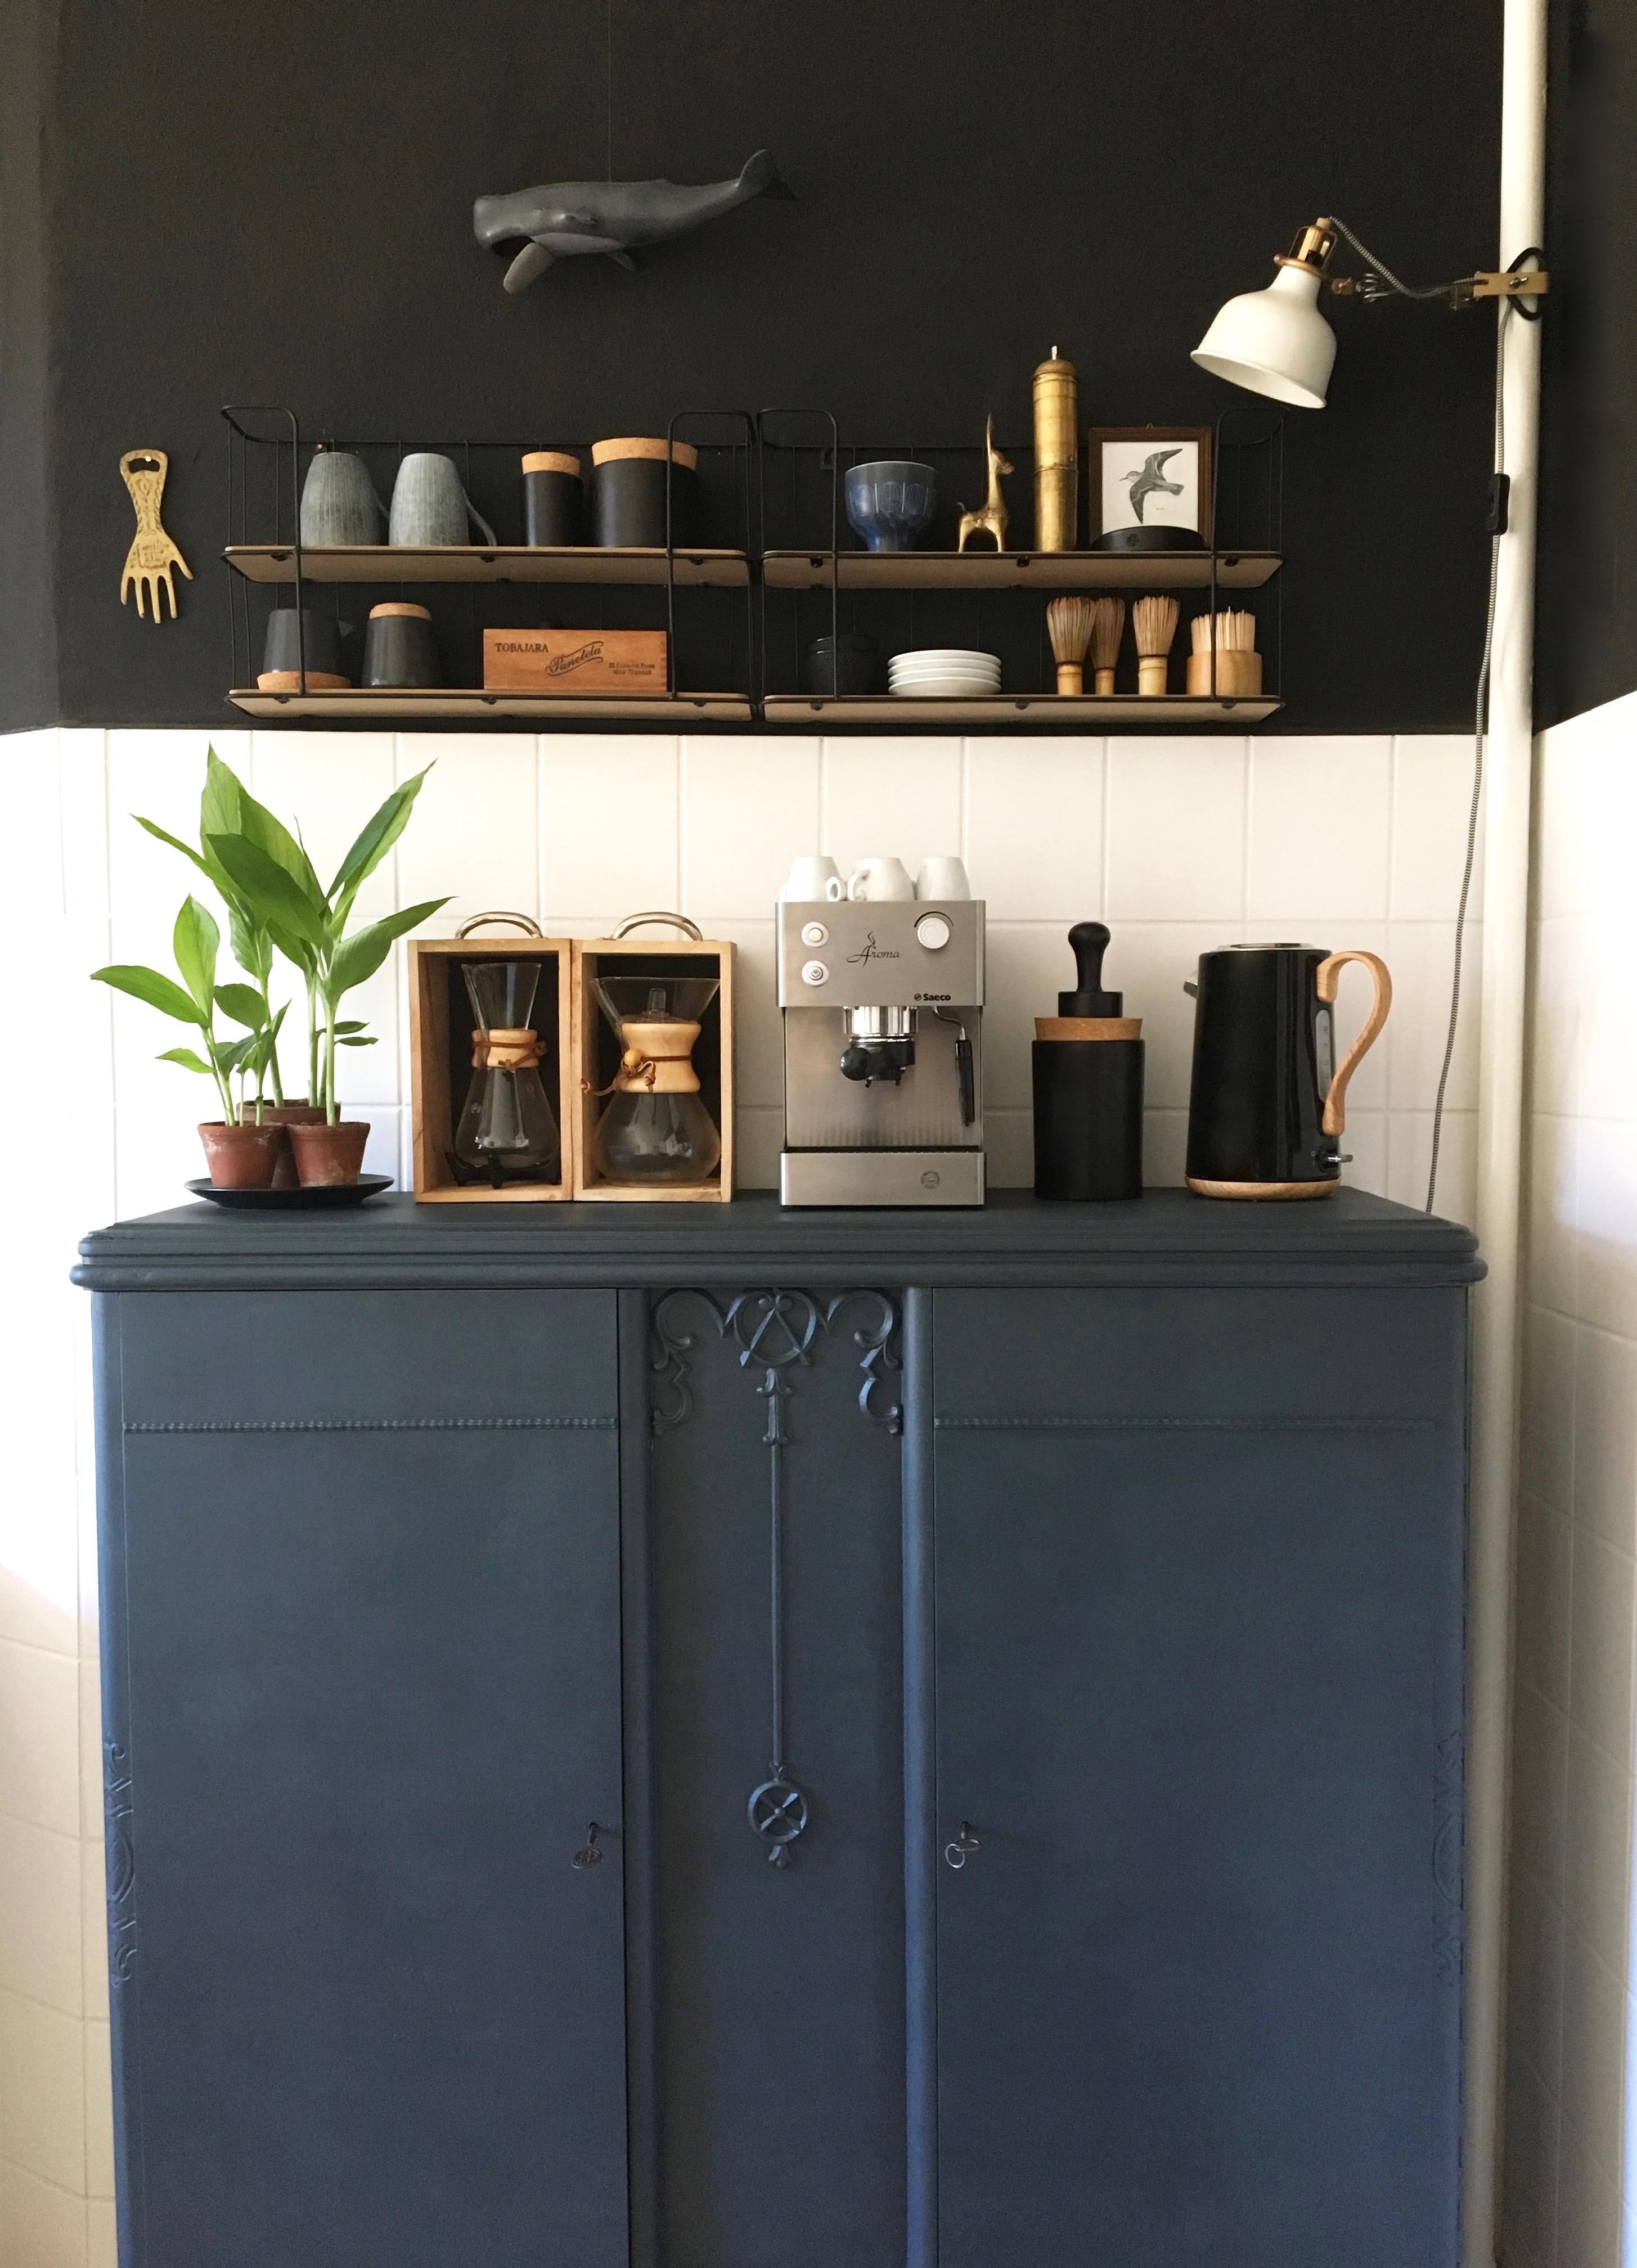 New painting of our old cupboard 🐋

#kitchen #keramik #blackwall #vintage #altbauwohnung #interior #midcentury